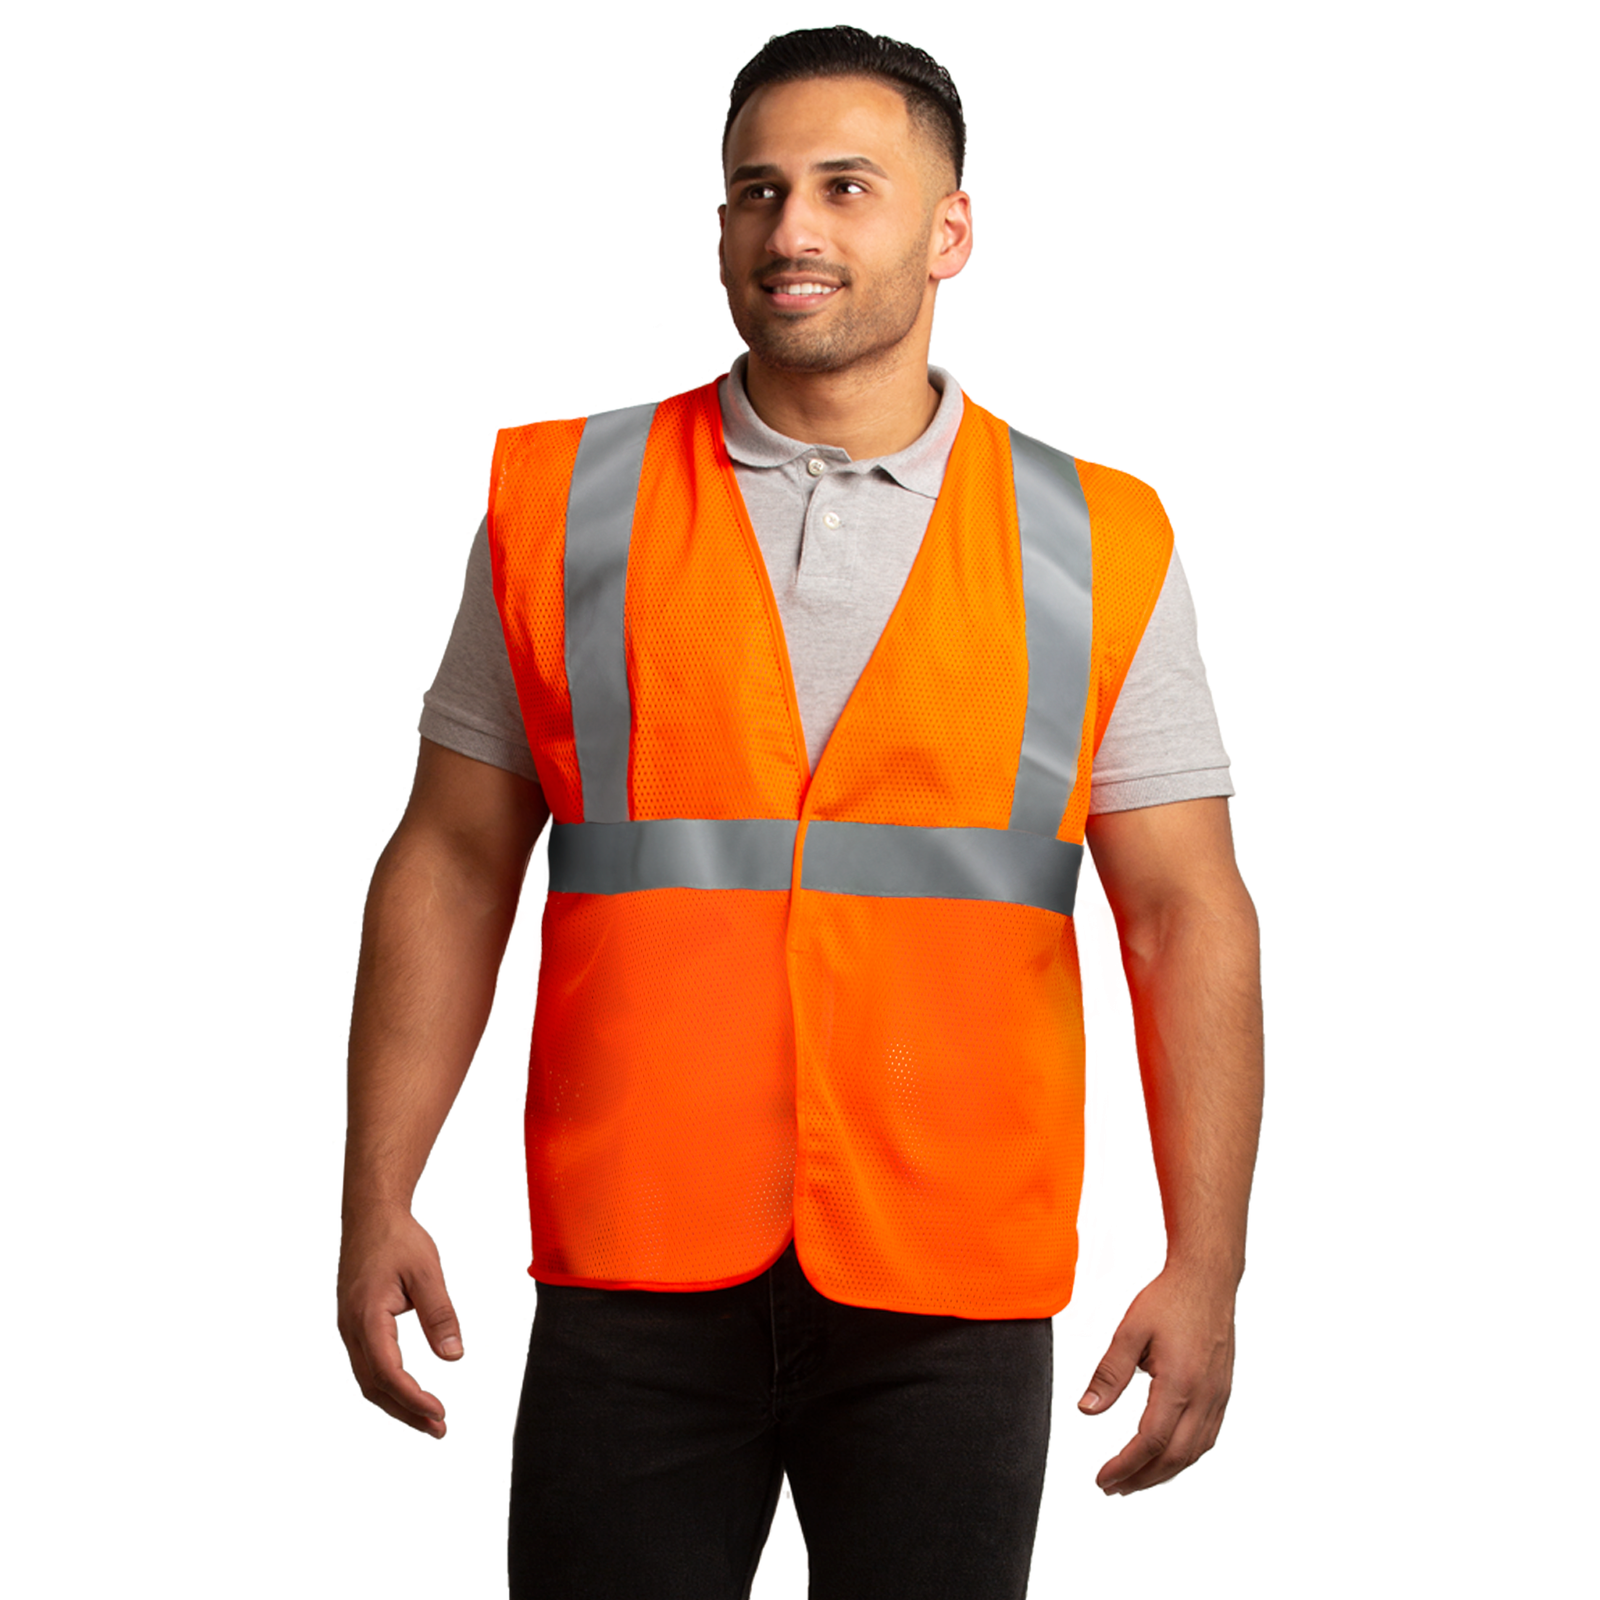 A man wearing the reflective orange ANSI compliant safety vest 